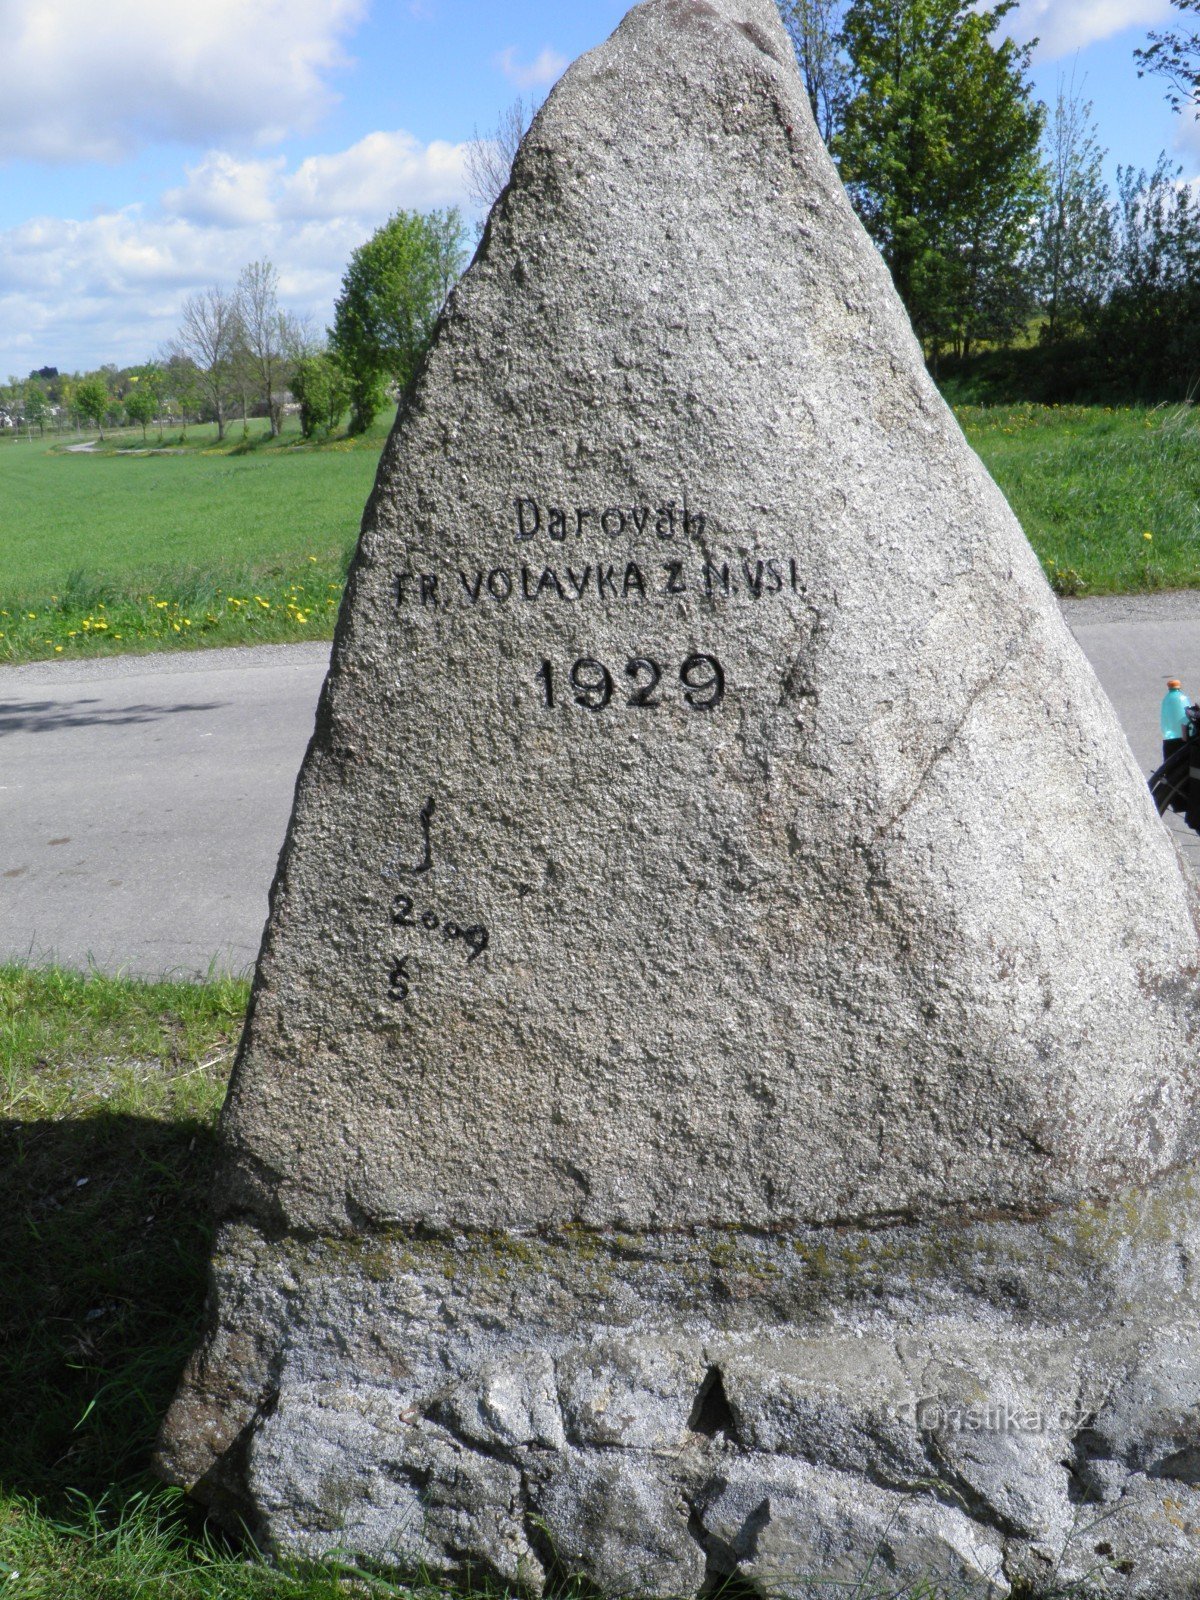 La piedra de Žižka "Sobre Žižkovy"